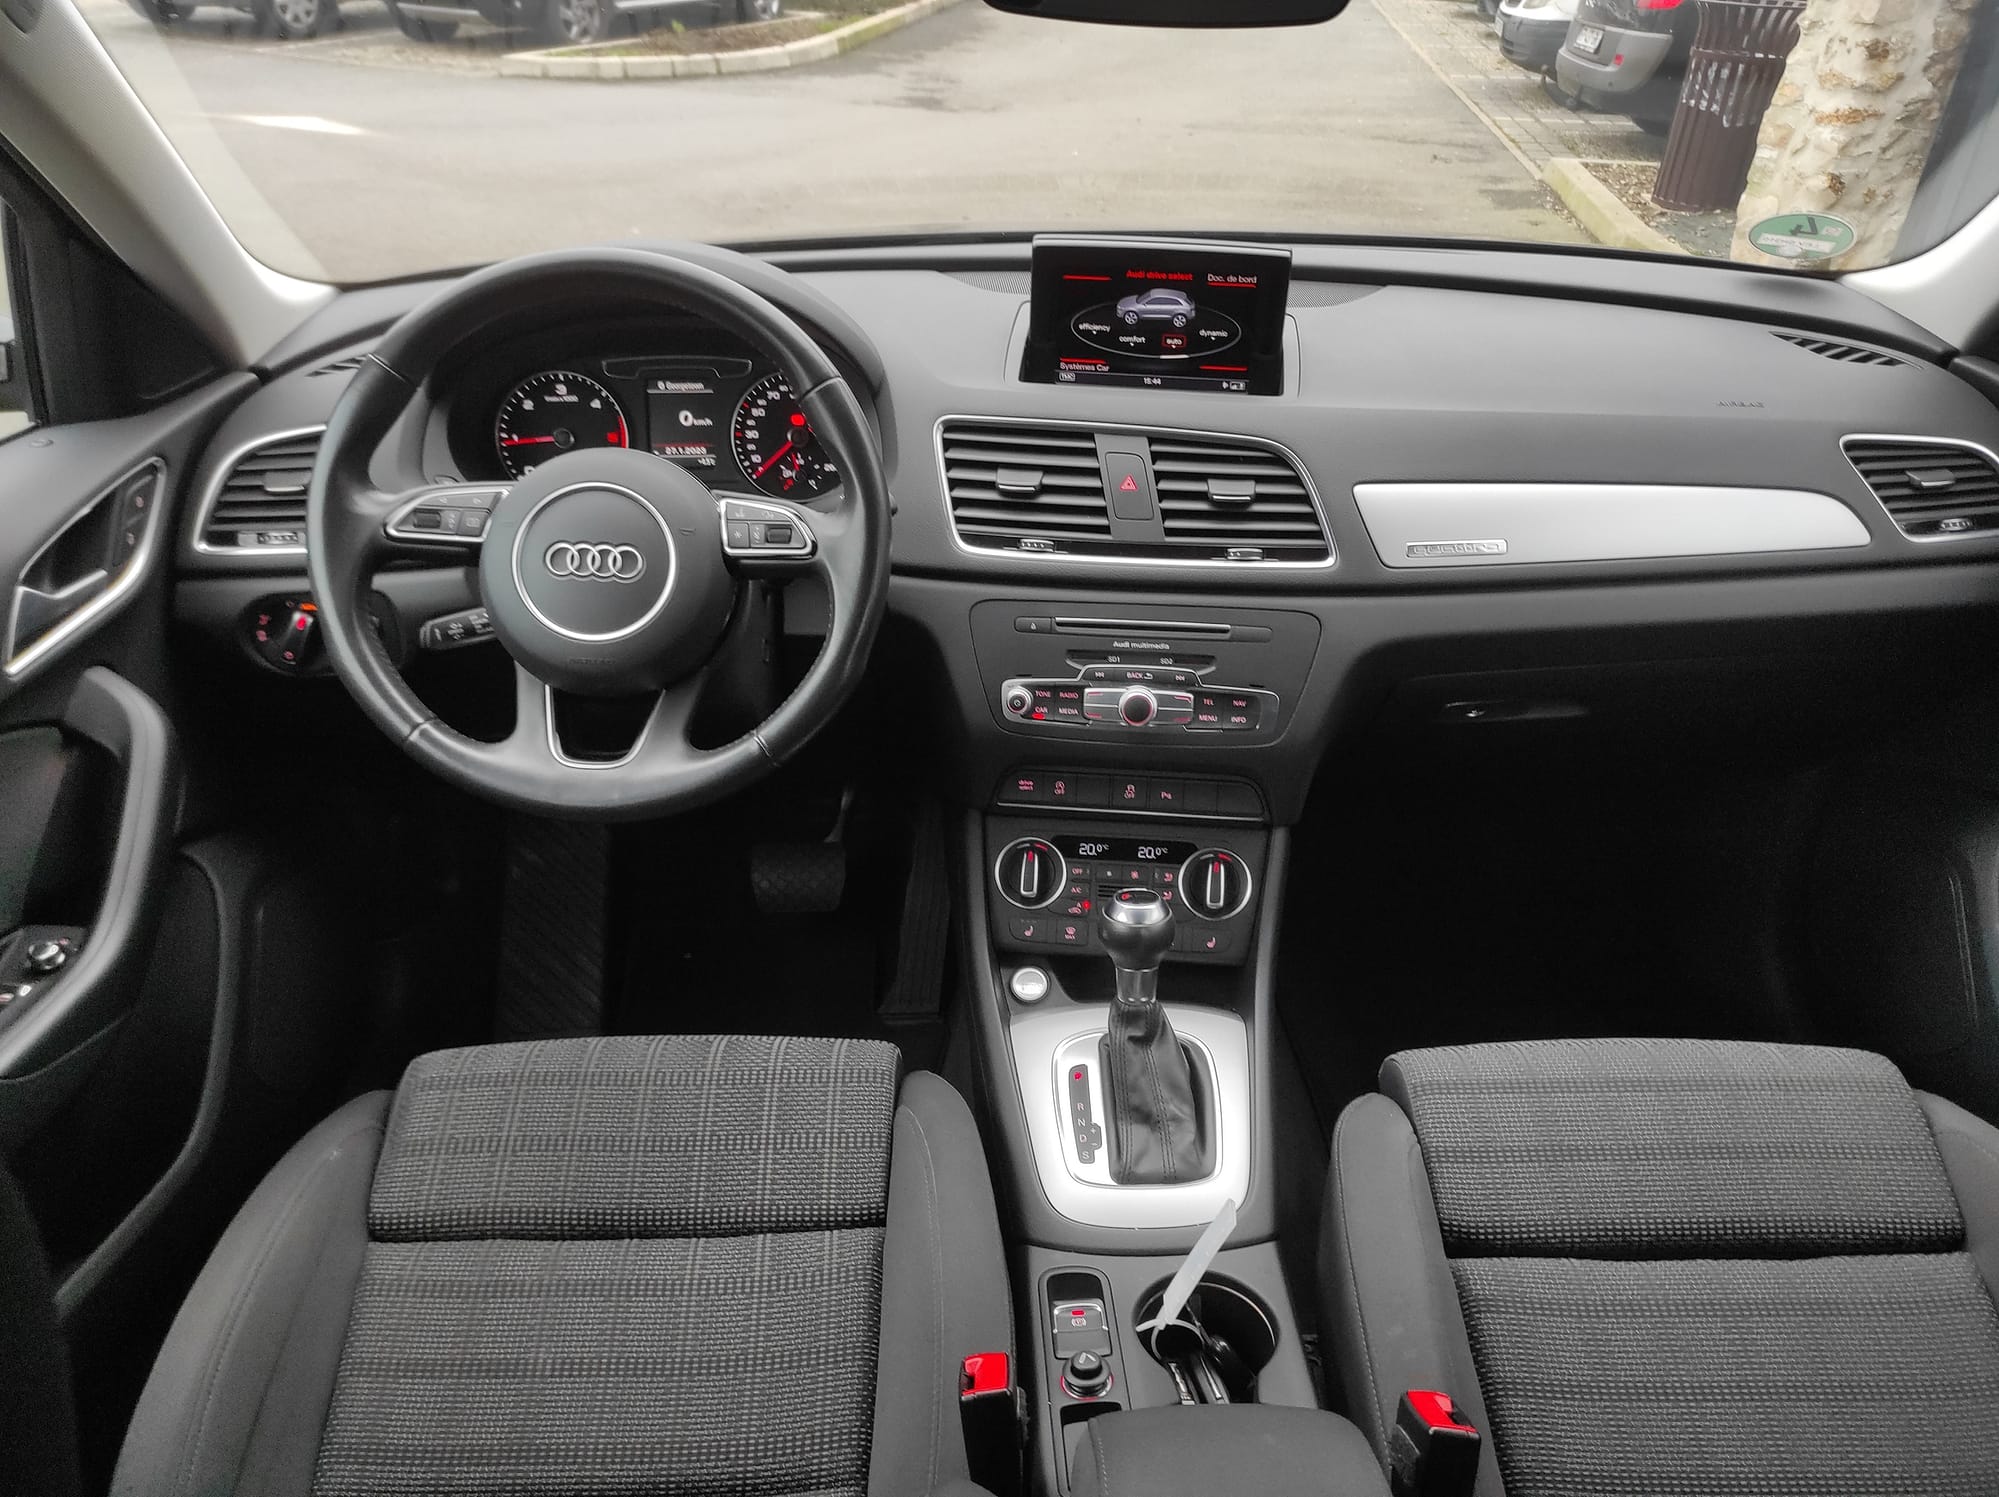 Audi Q3 2018 (2) 2.0 TDI 150 Sport Quattro S-TRONIC - Automatix Motors - Voiture Occasion - Achat Voiture - Vente Voiture - Reprise Voiture